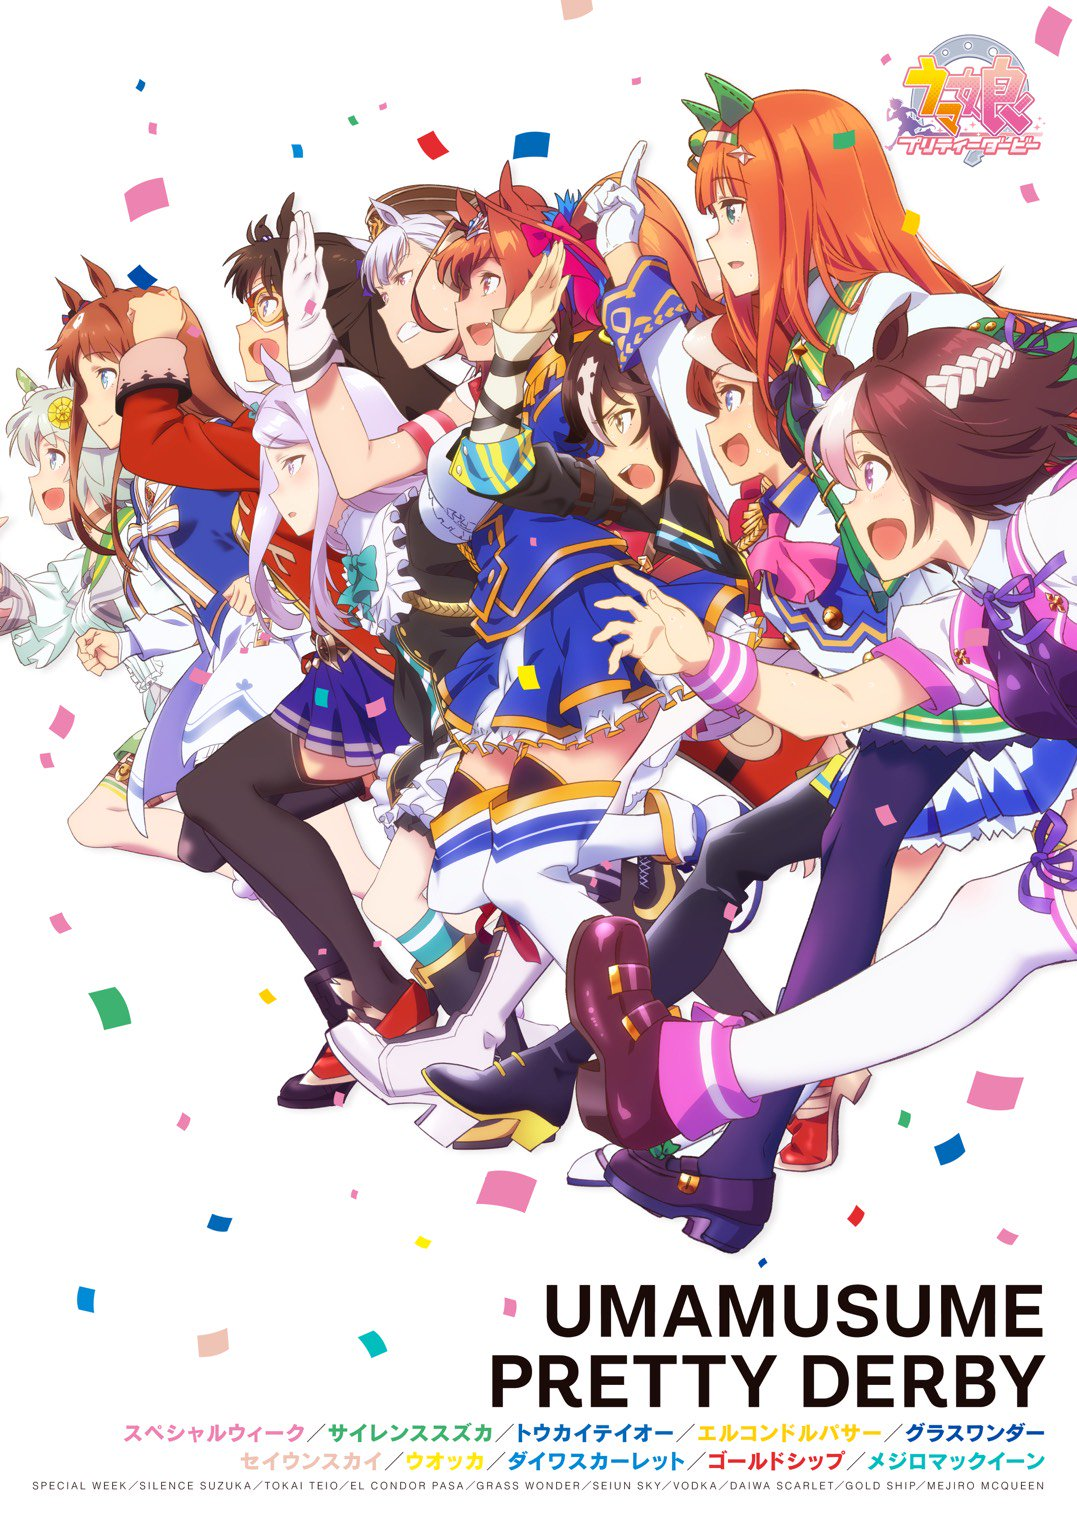 Umamusume: Pretty Derby Season 3 Anime Premieres October 4